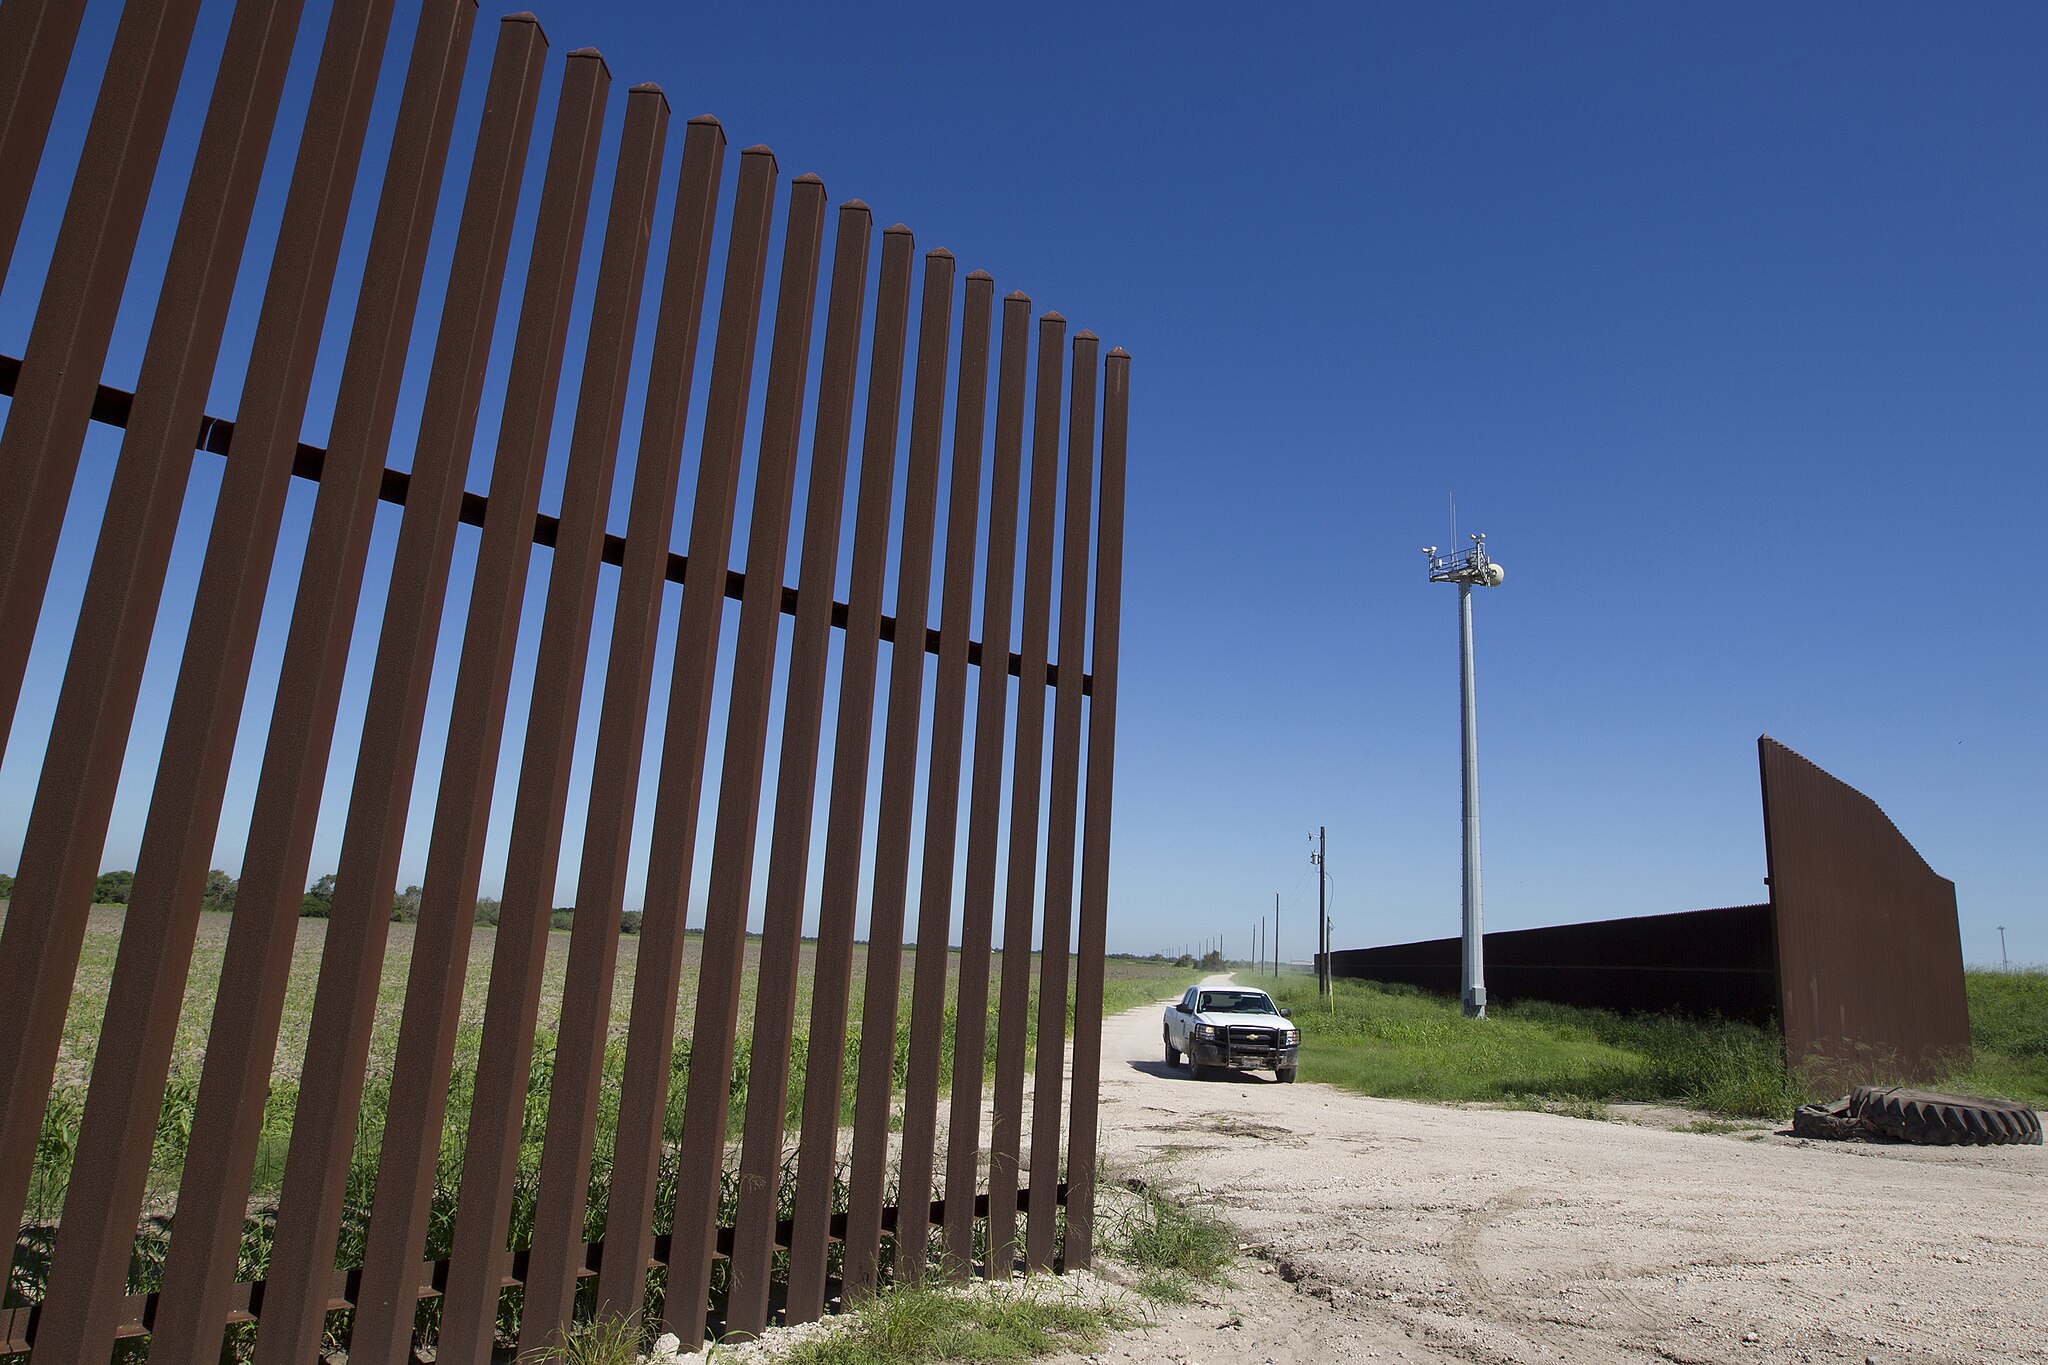 US appeals court upholds preliminary injunction preventing enforcement of Texas immigration law SB4 pending litigation